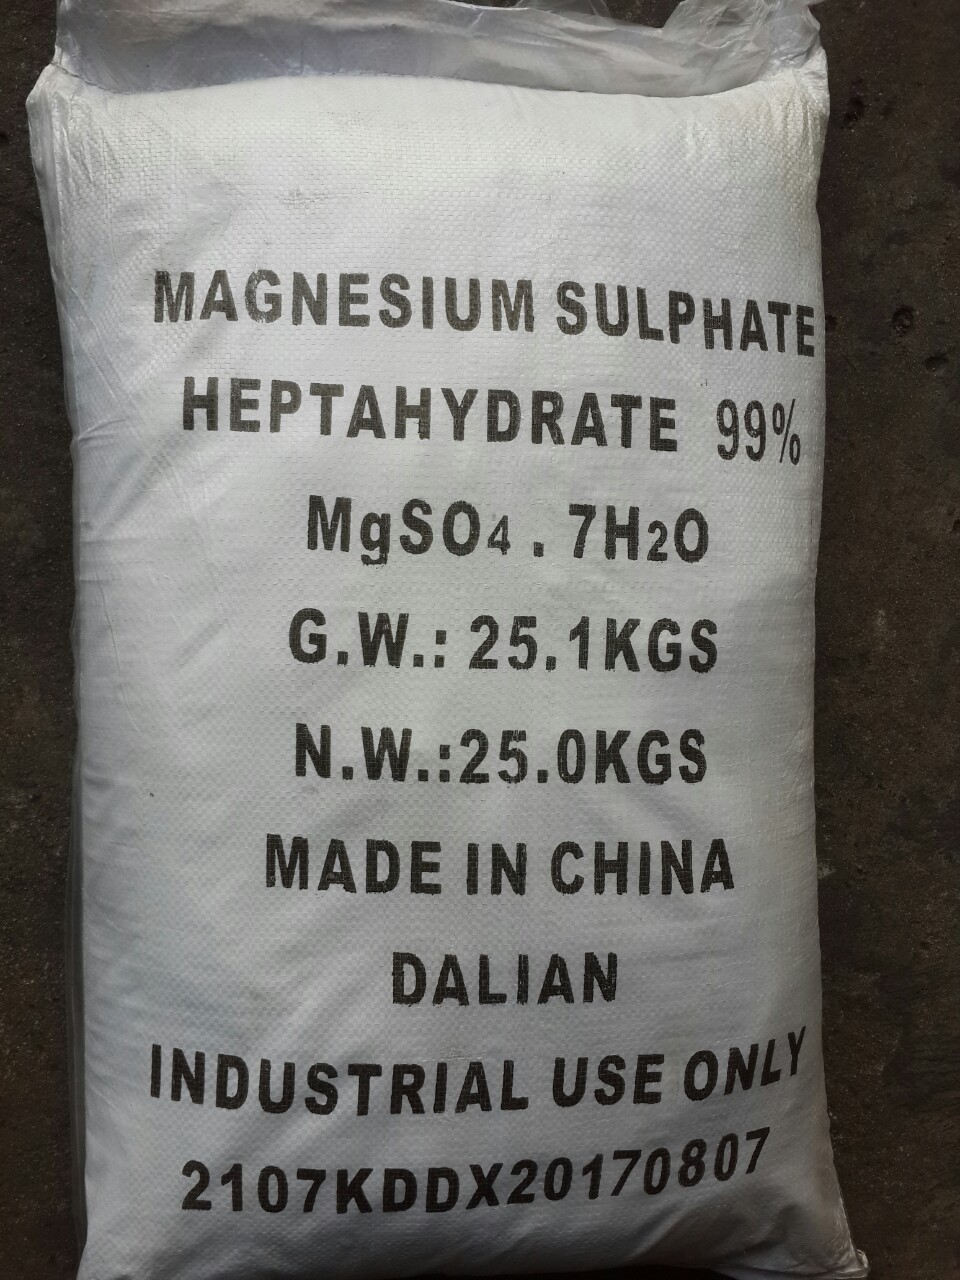 MgSO4 99% - Magie Sulphate